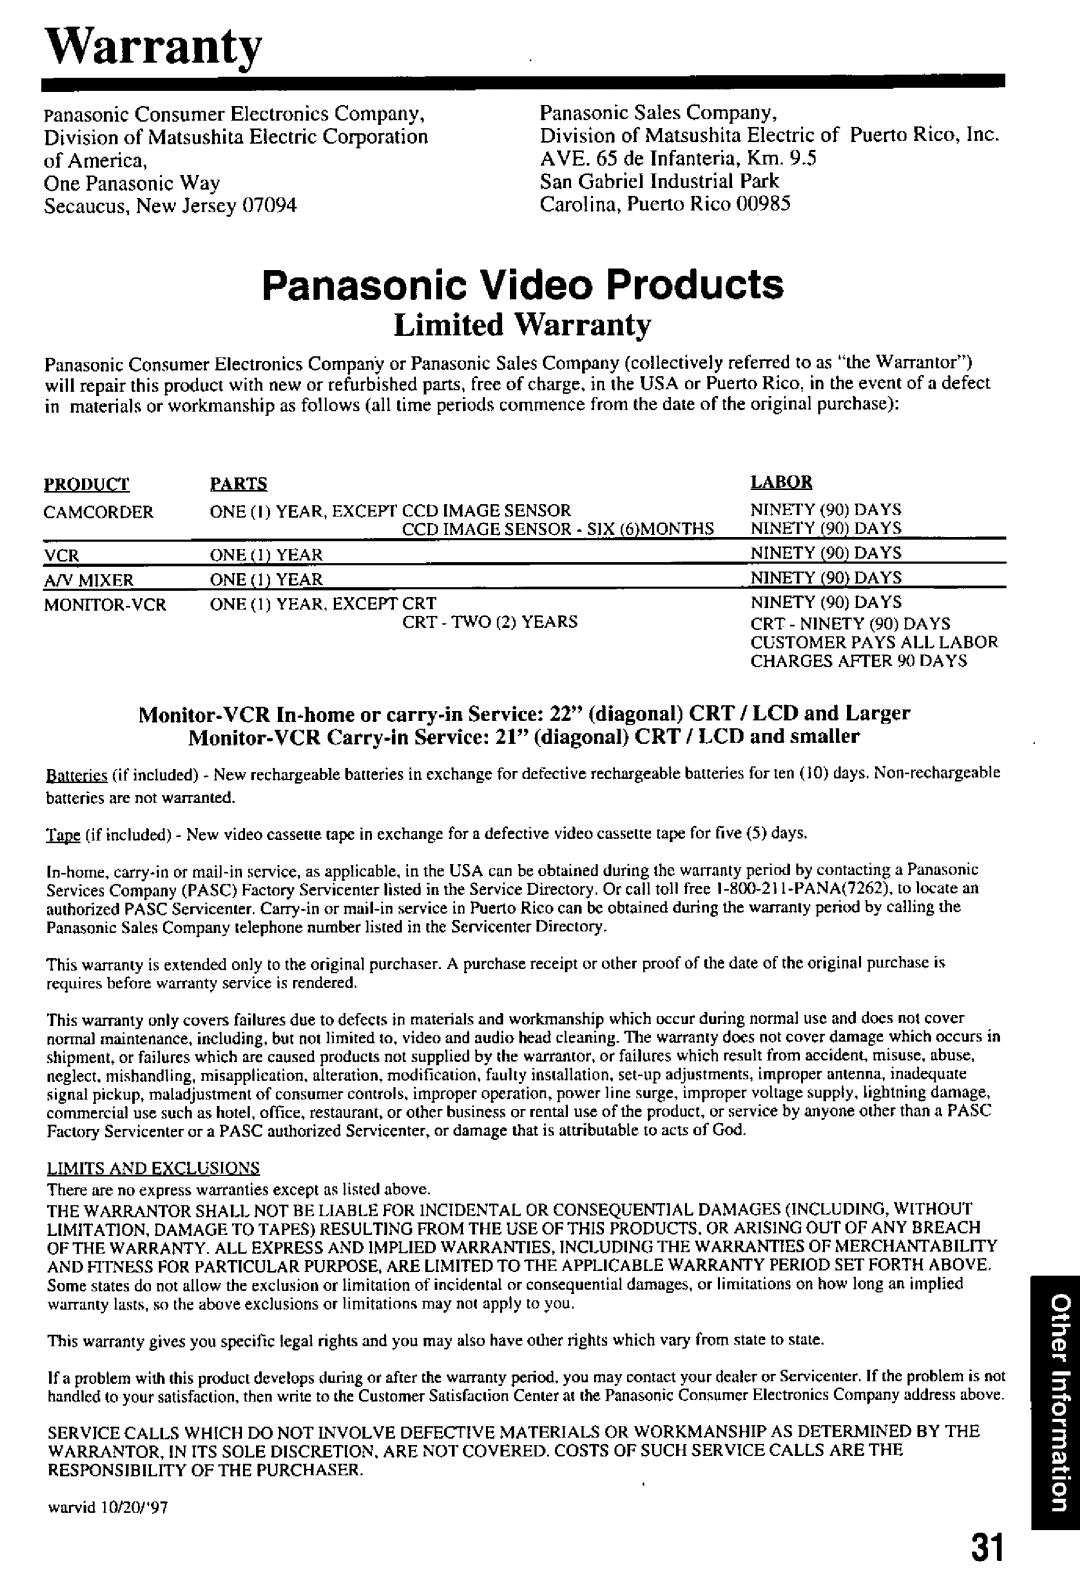 Panasonic PV-M2768 manual 